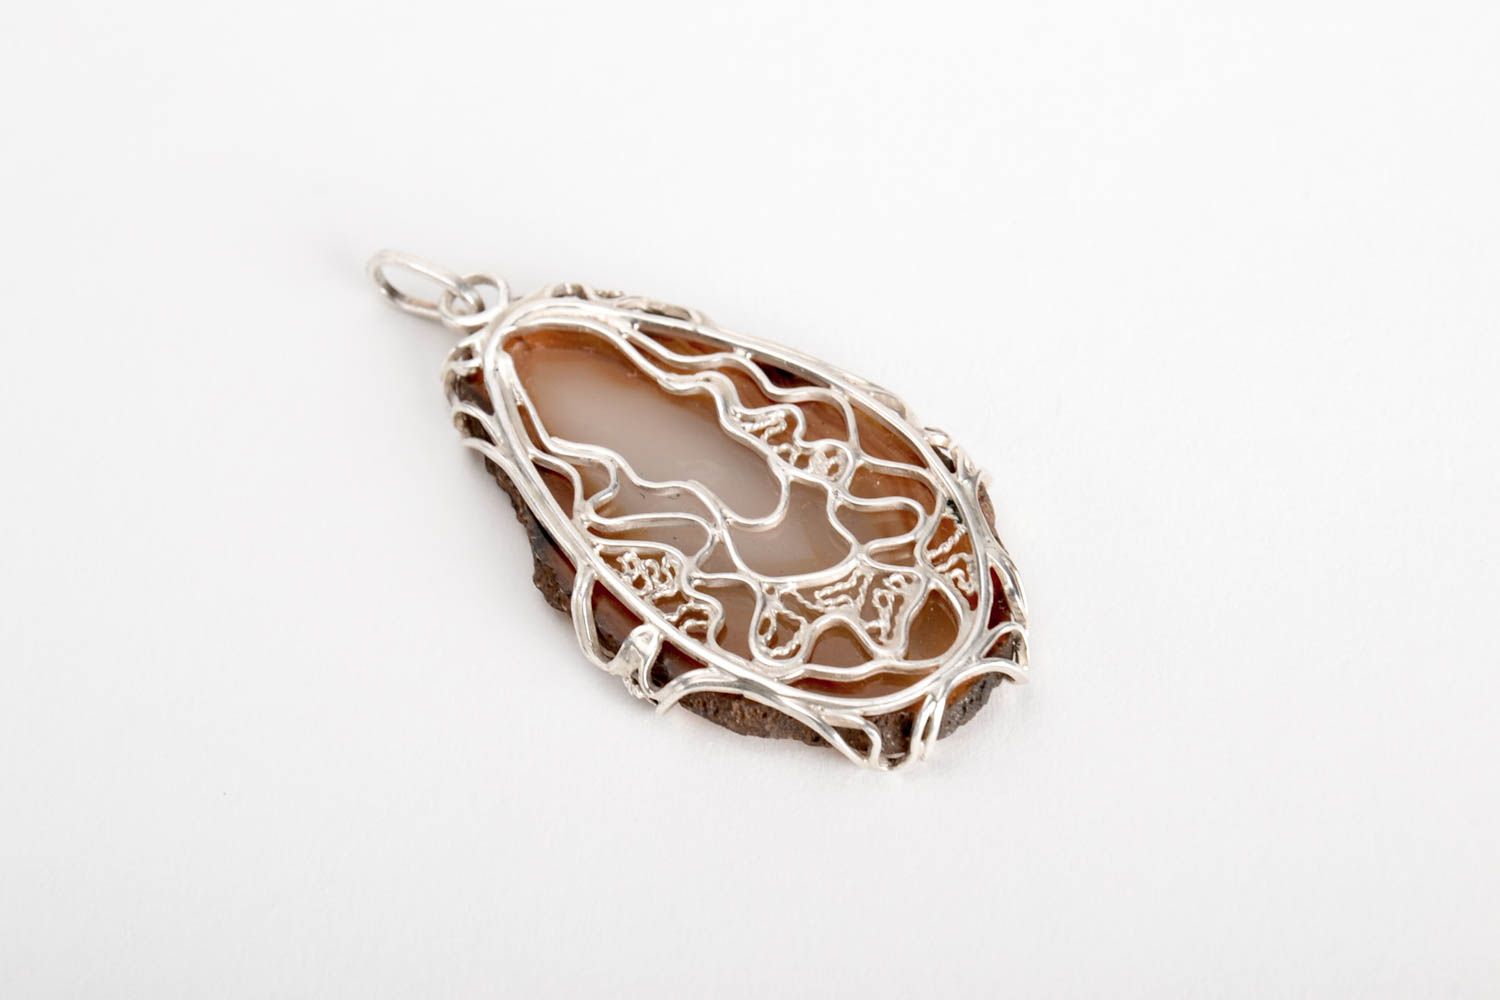 Handmade agate pendant unusual neck pendant silver jewelry womens accessory photo 3